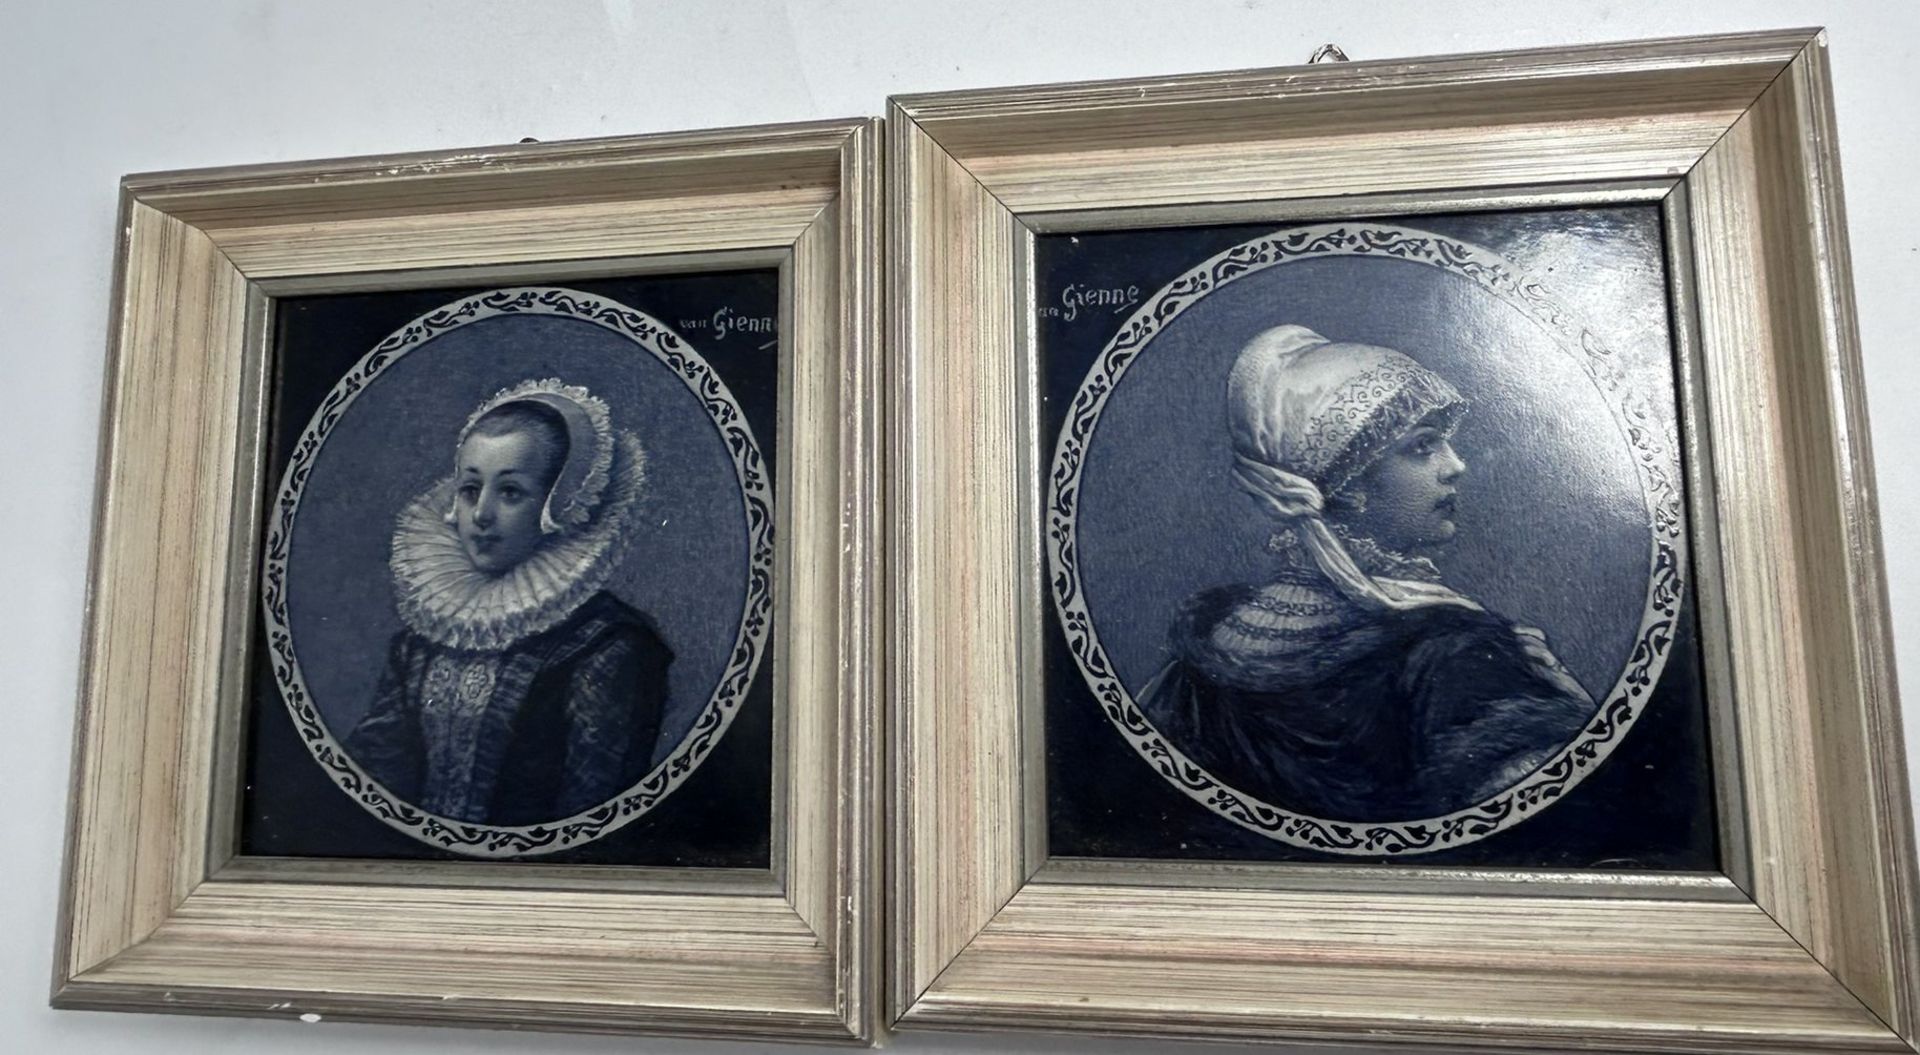 van Gienne signierte 2 Portrait-Fliesen, Blaumalerei, gerahmt, je ca. 14x14 cm